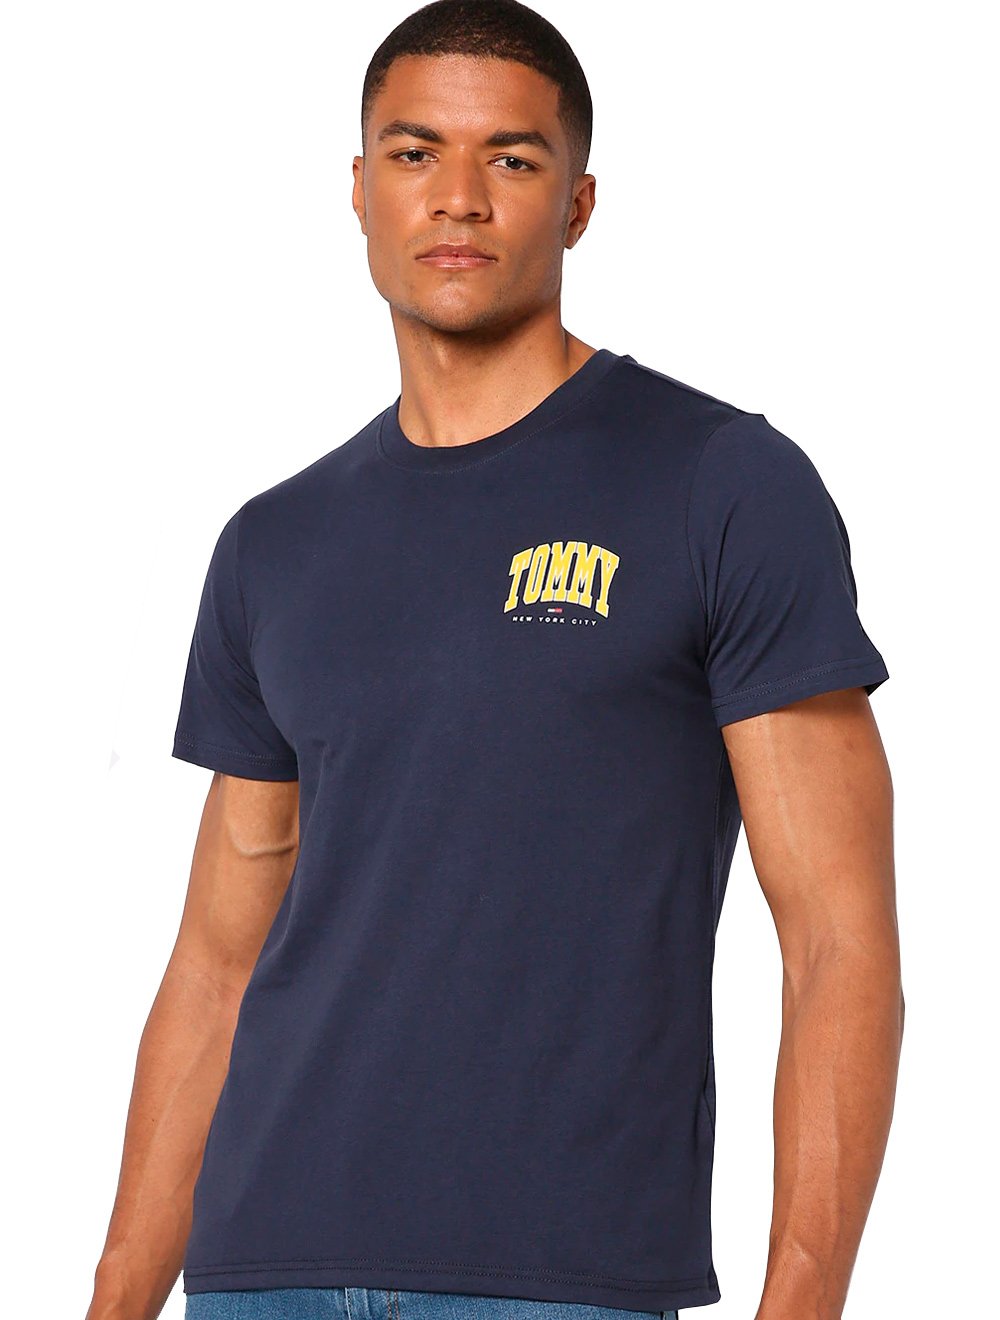 Camiseta Tommy Jeans Masculina Chest College Graphic Azul Marinho